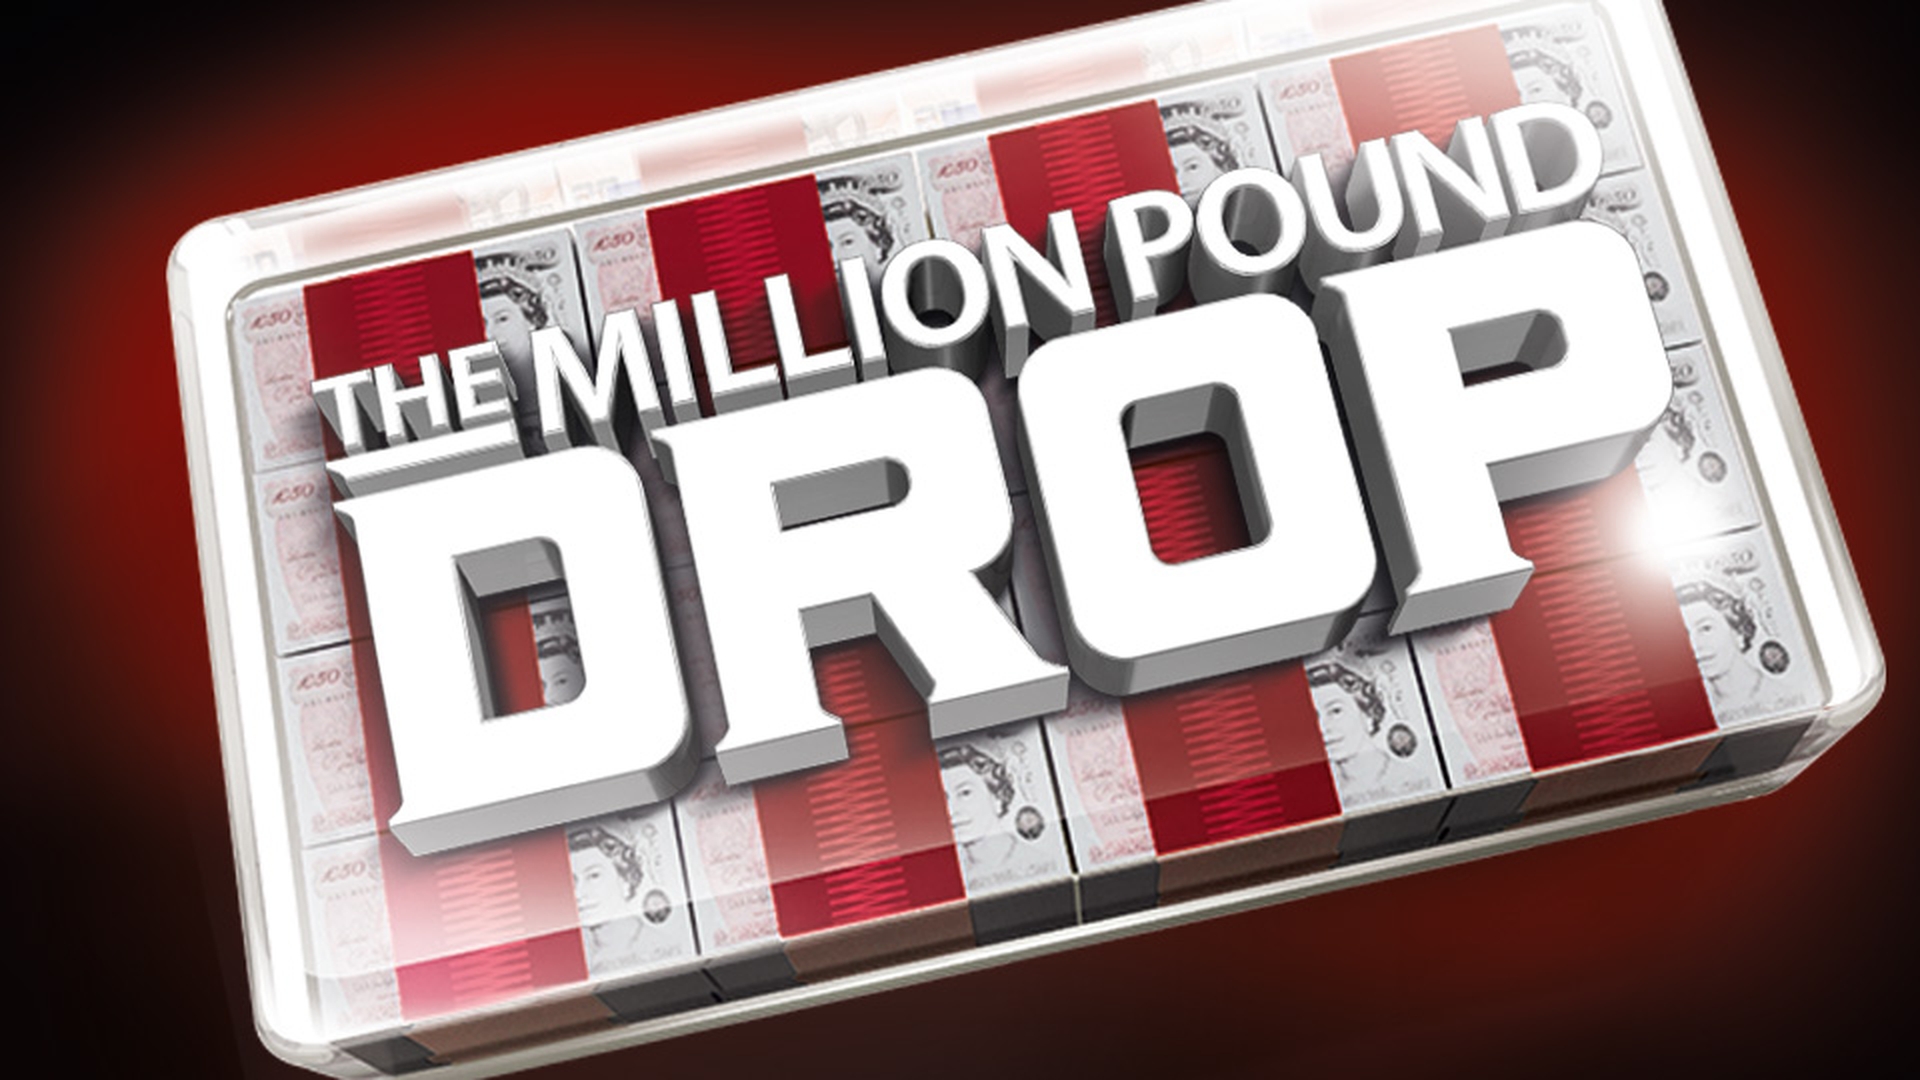 The Million Pound Drop demo